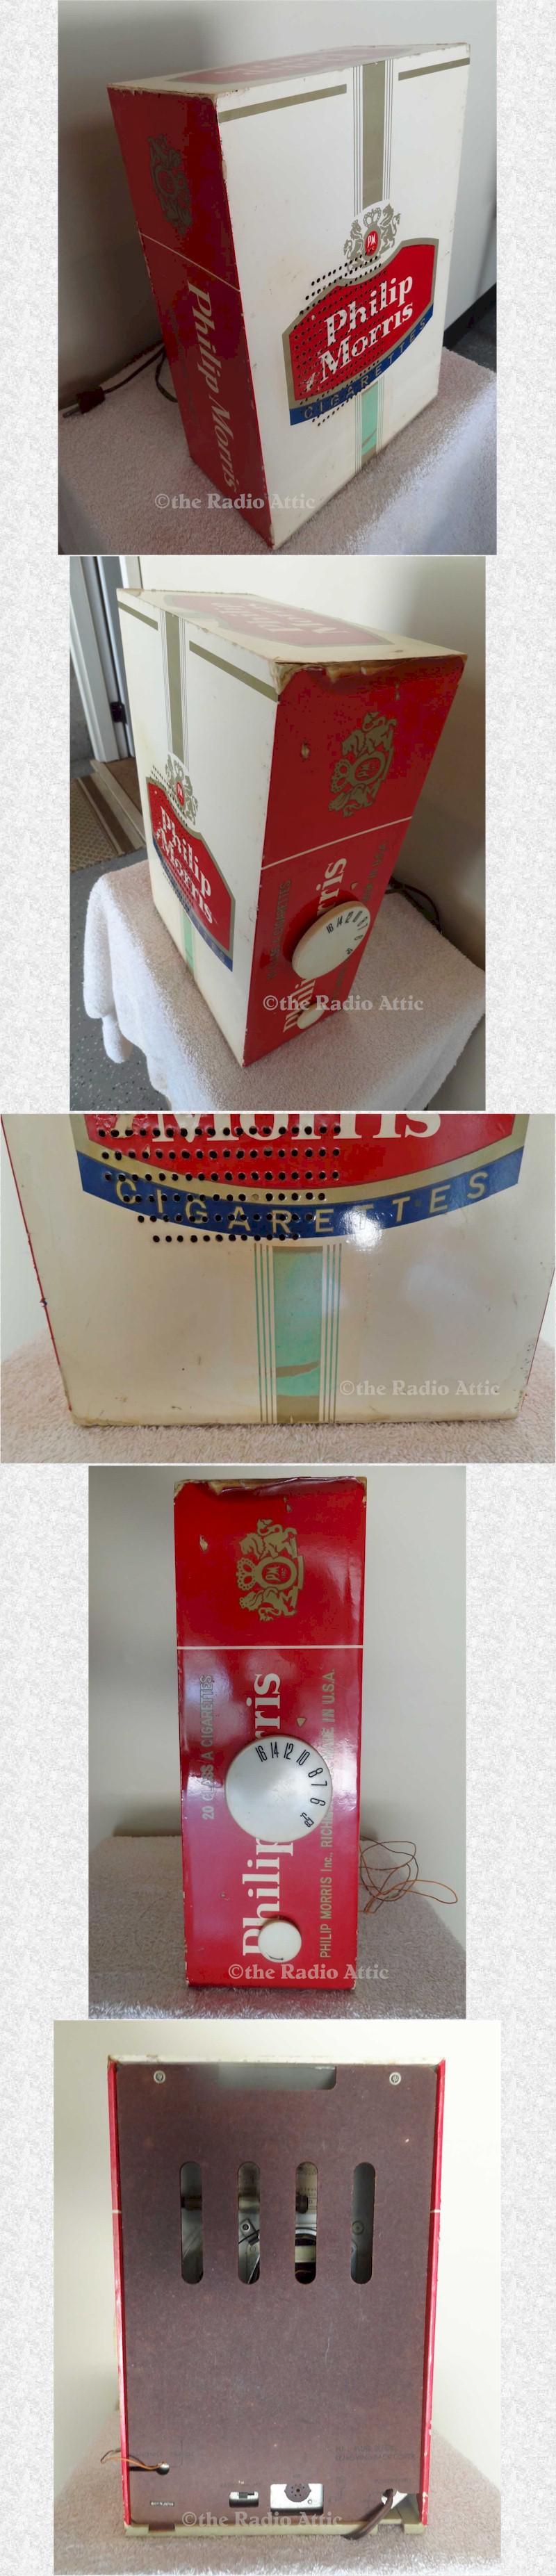 Philip Morris CD-V2 Cigarette Radio (Late 1950s?)